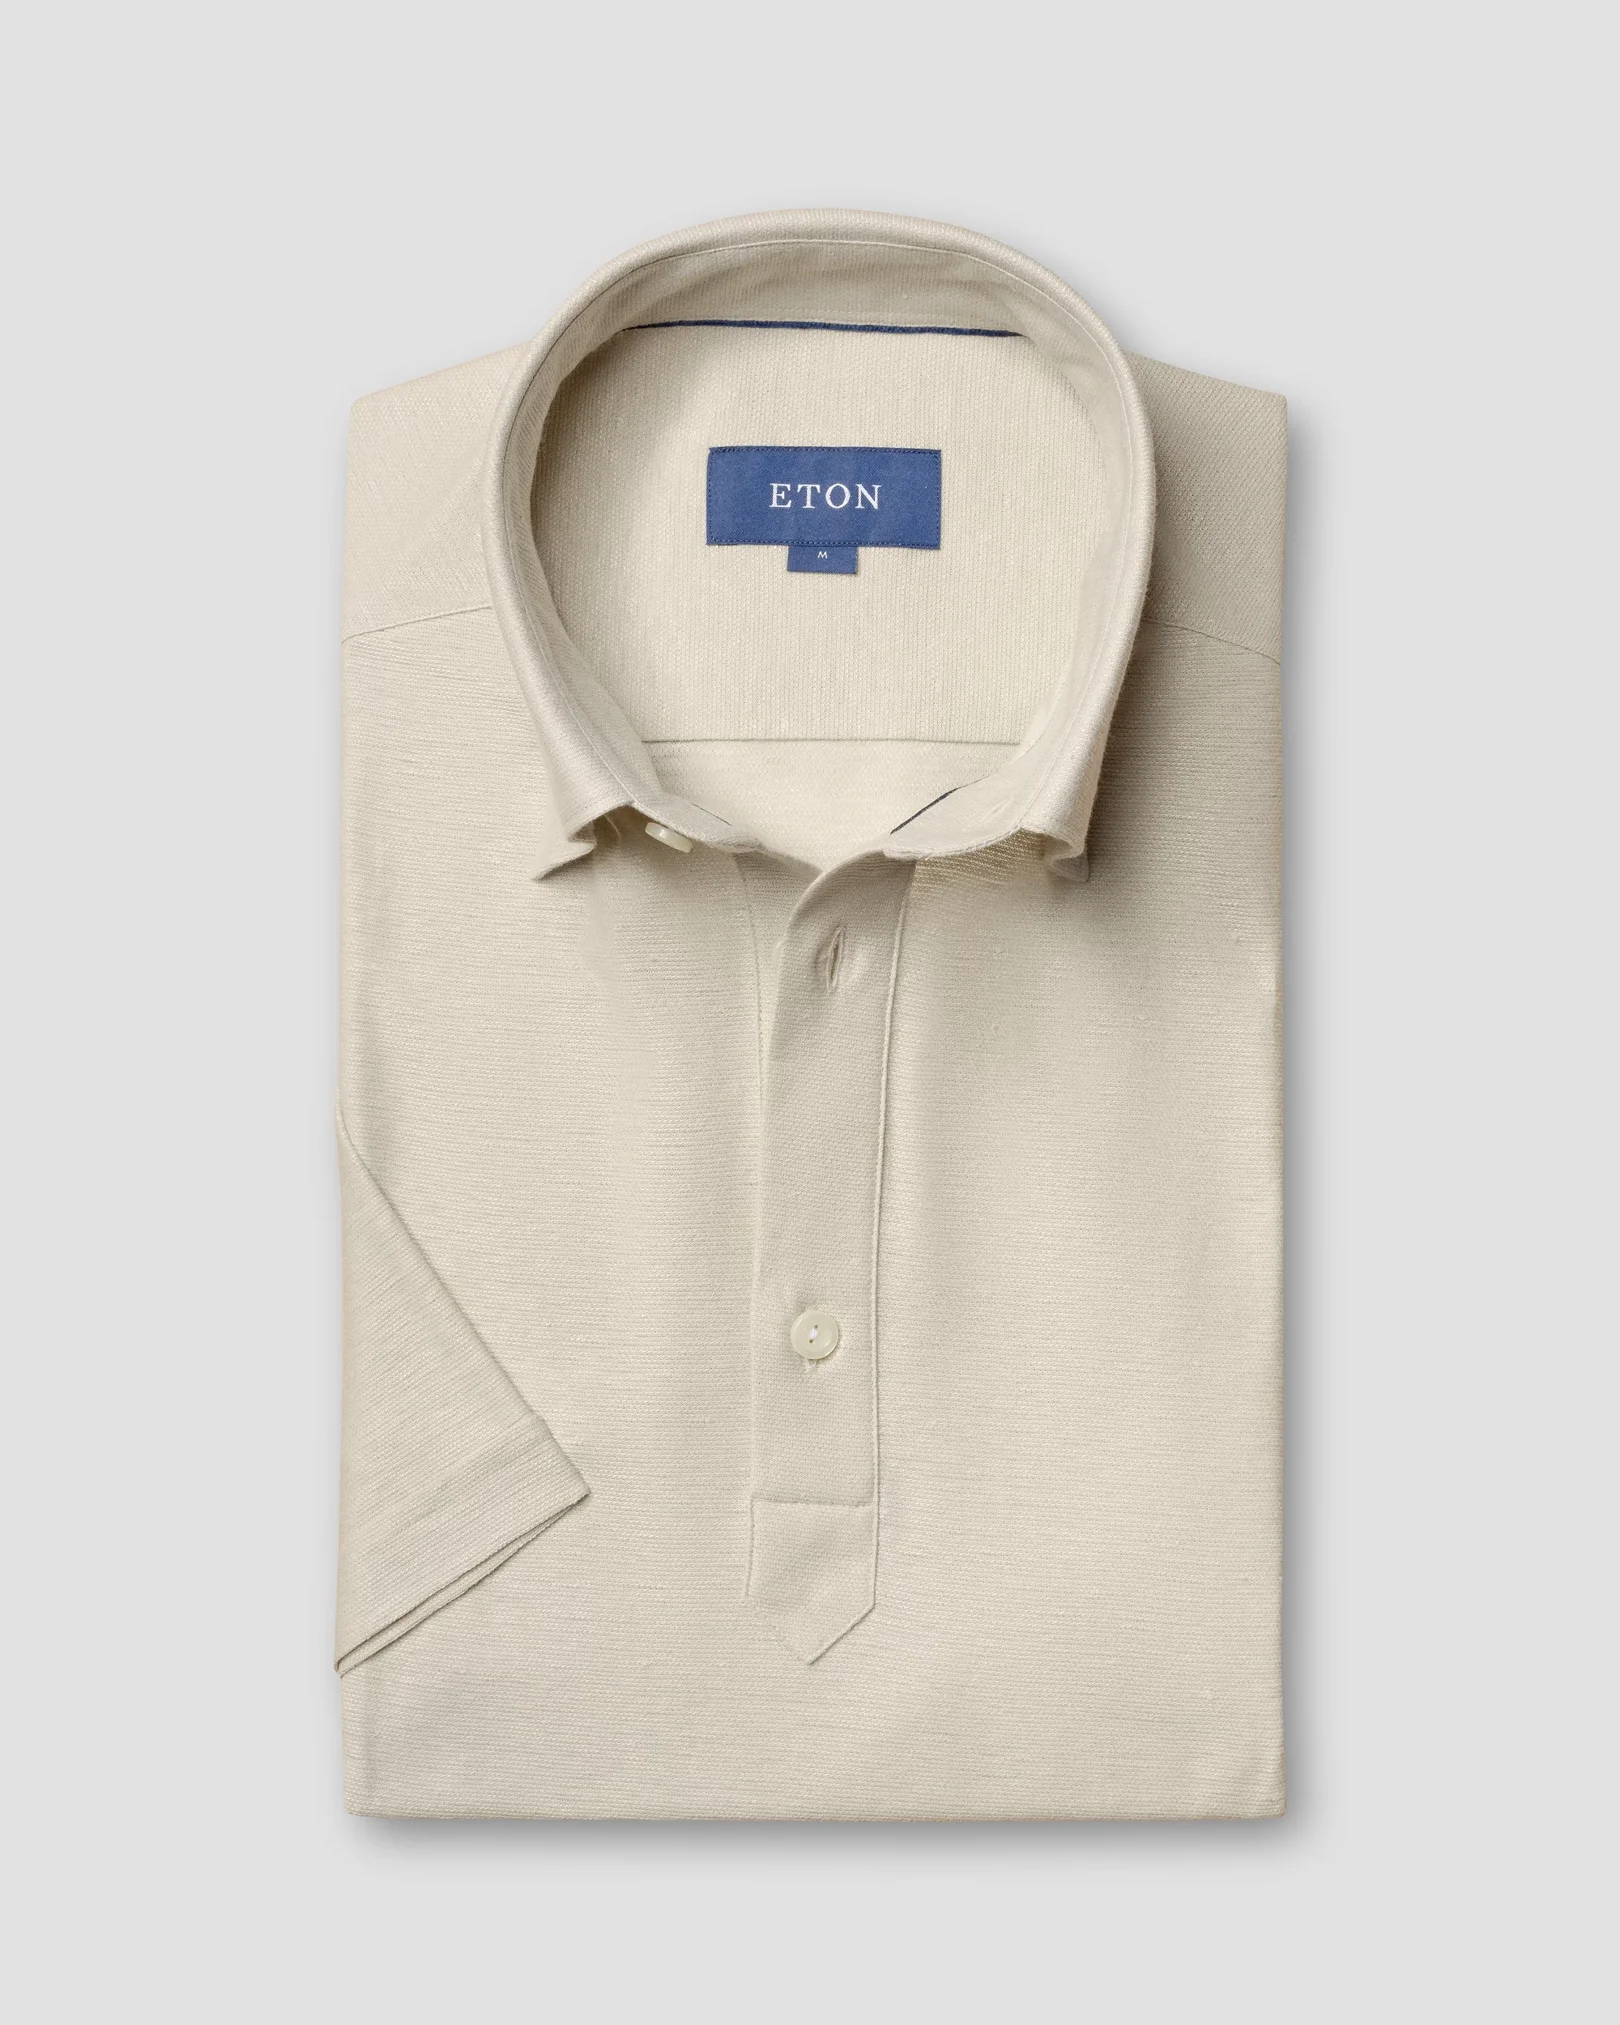 Eton - beige cotton linen polo shirt short sleeved